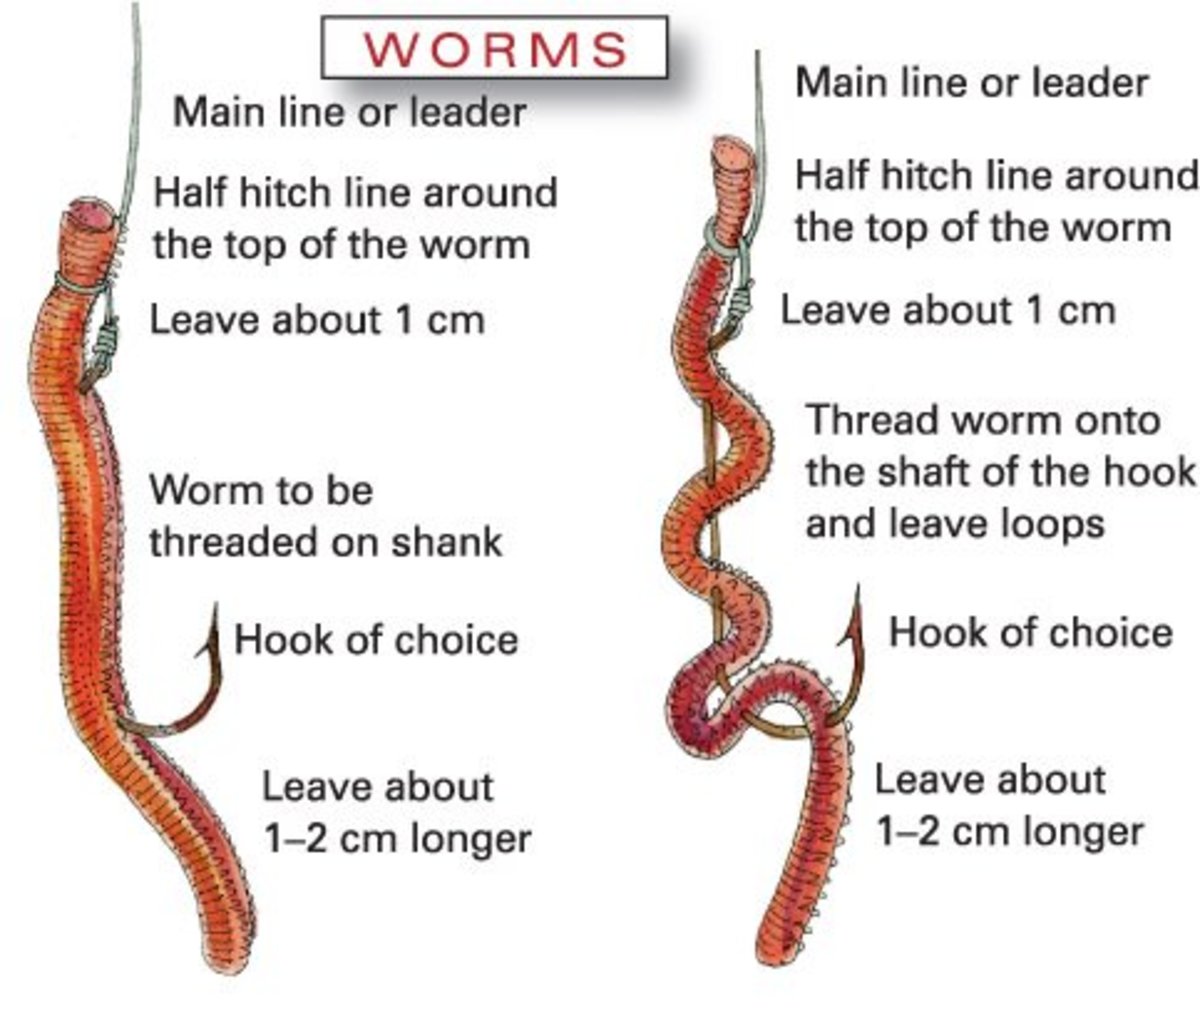 make money selling earthworms